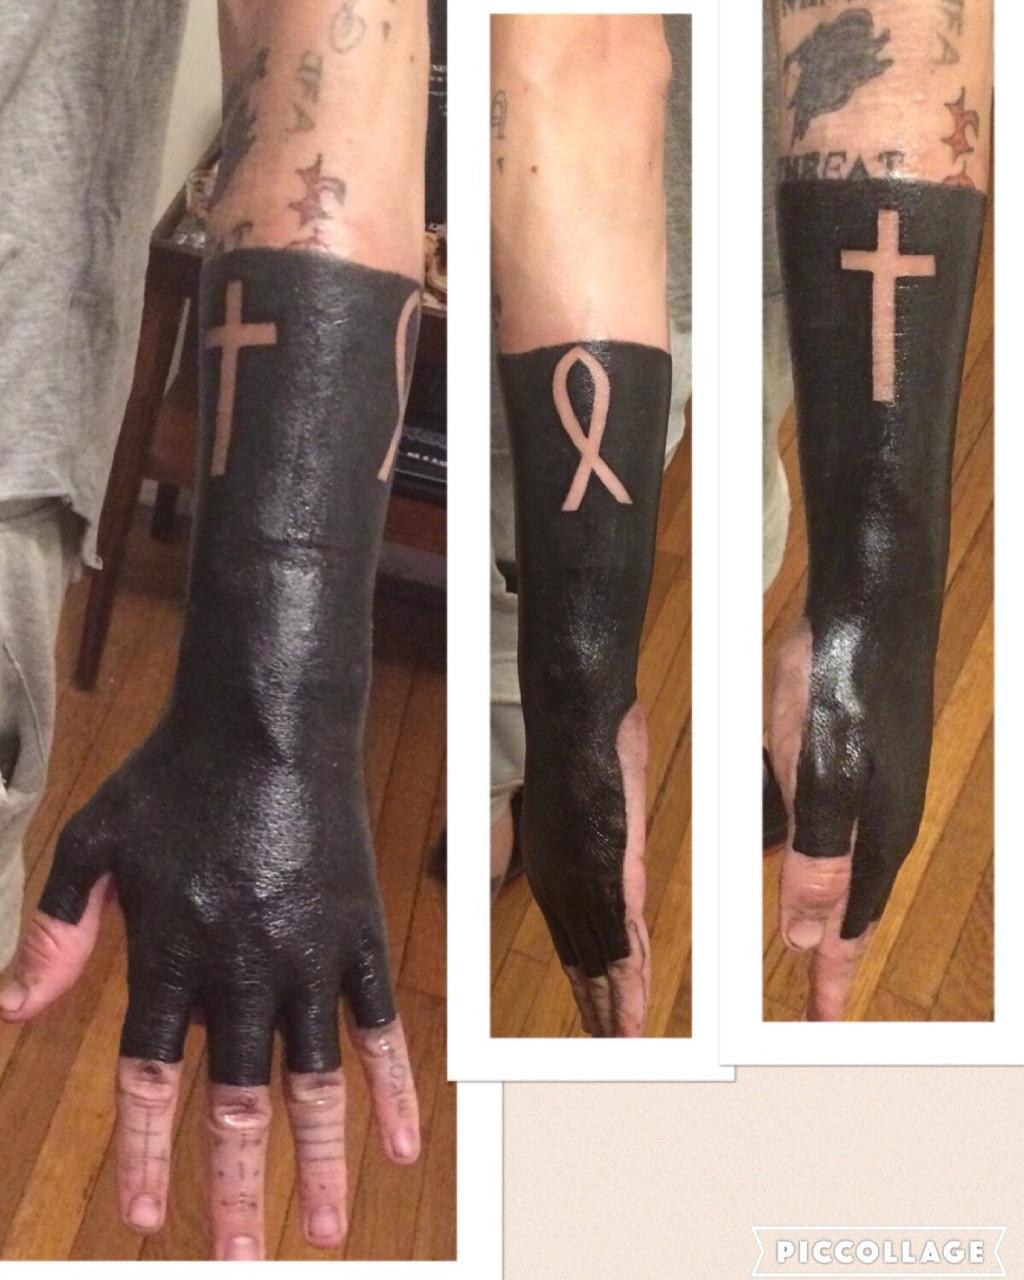 Arm Ghostemane Tattoos